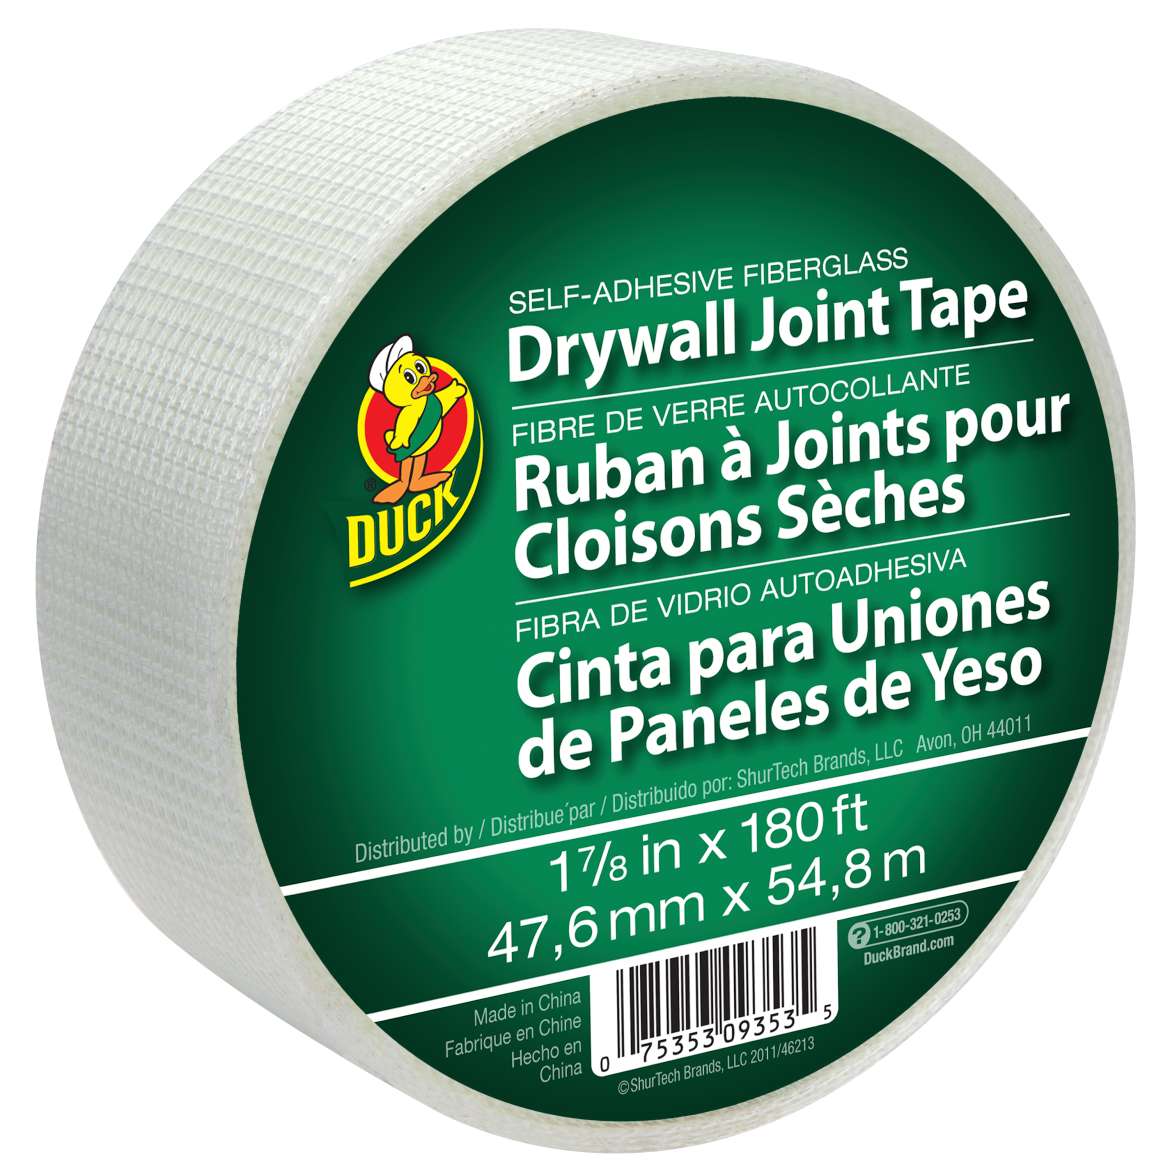 Duck Brand Drywall Joint Tape [Self-Adhesive Fiberglass]